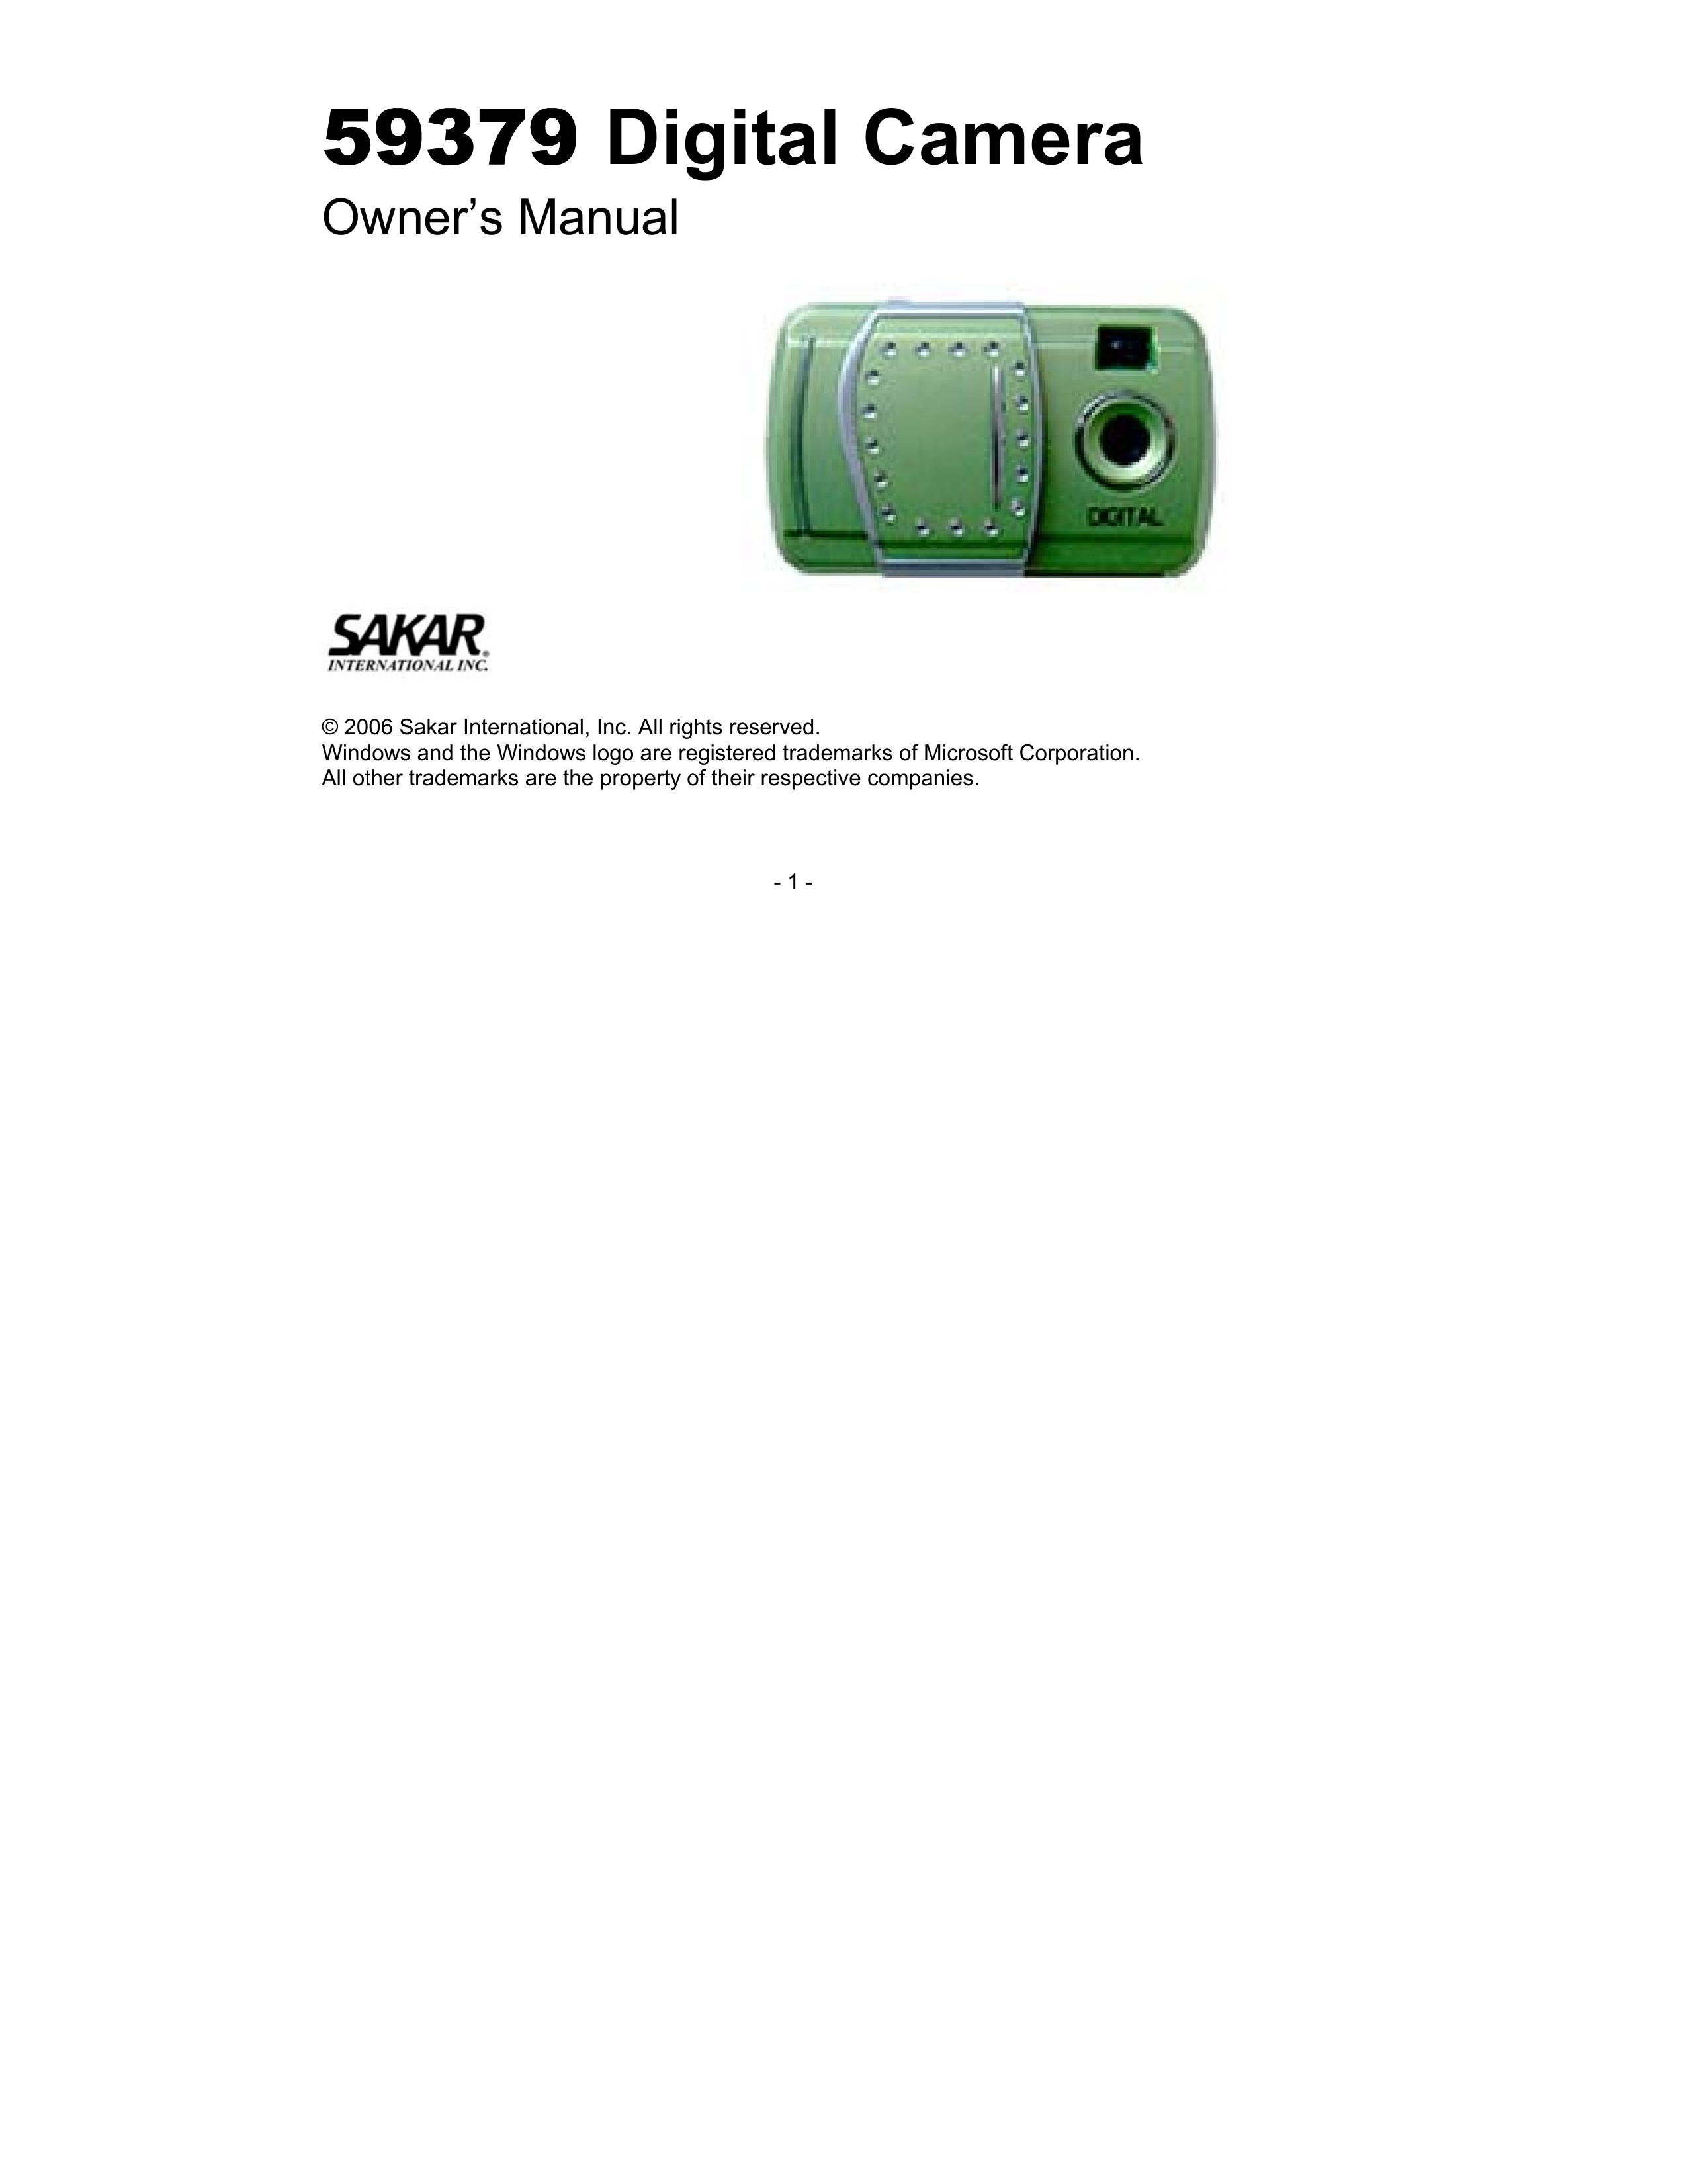 Sakar 59379 Digital Camera User Manual